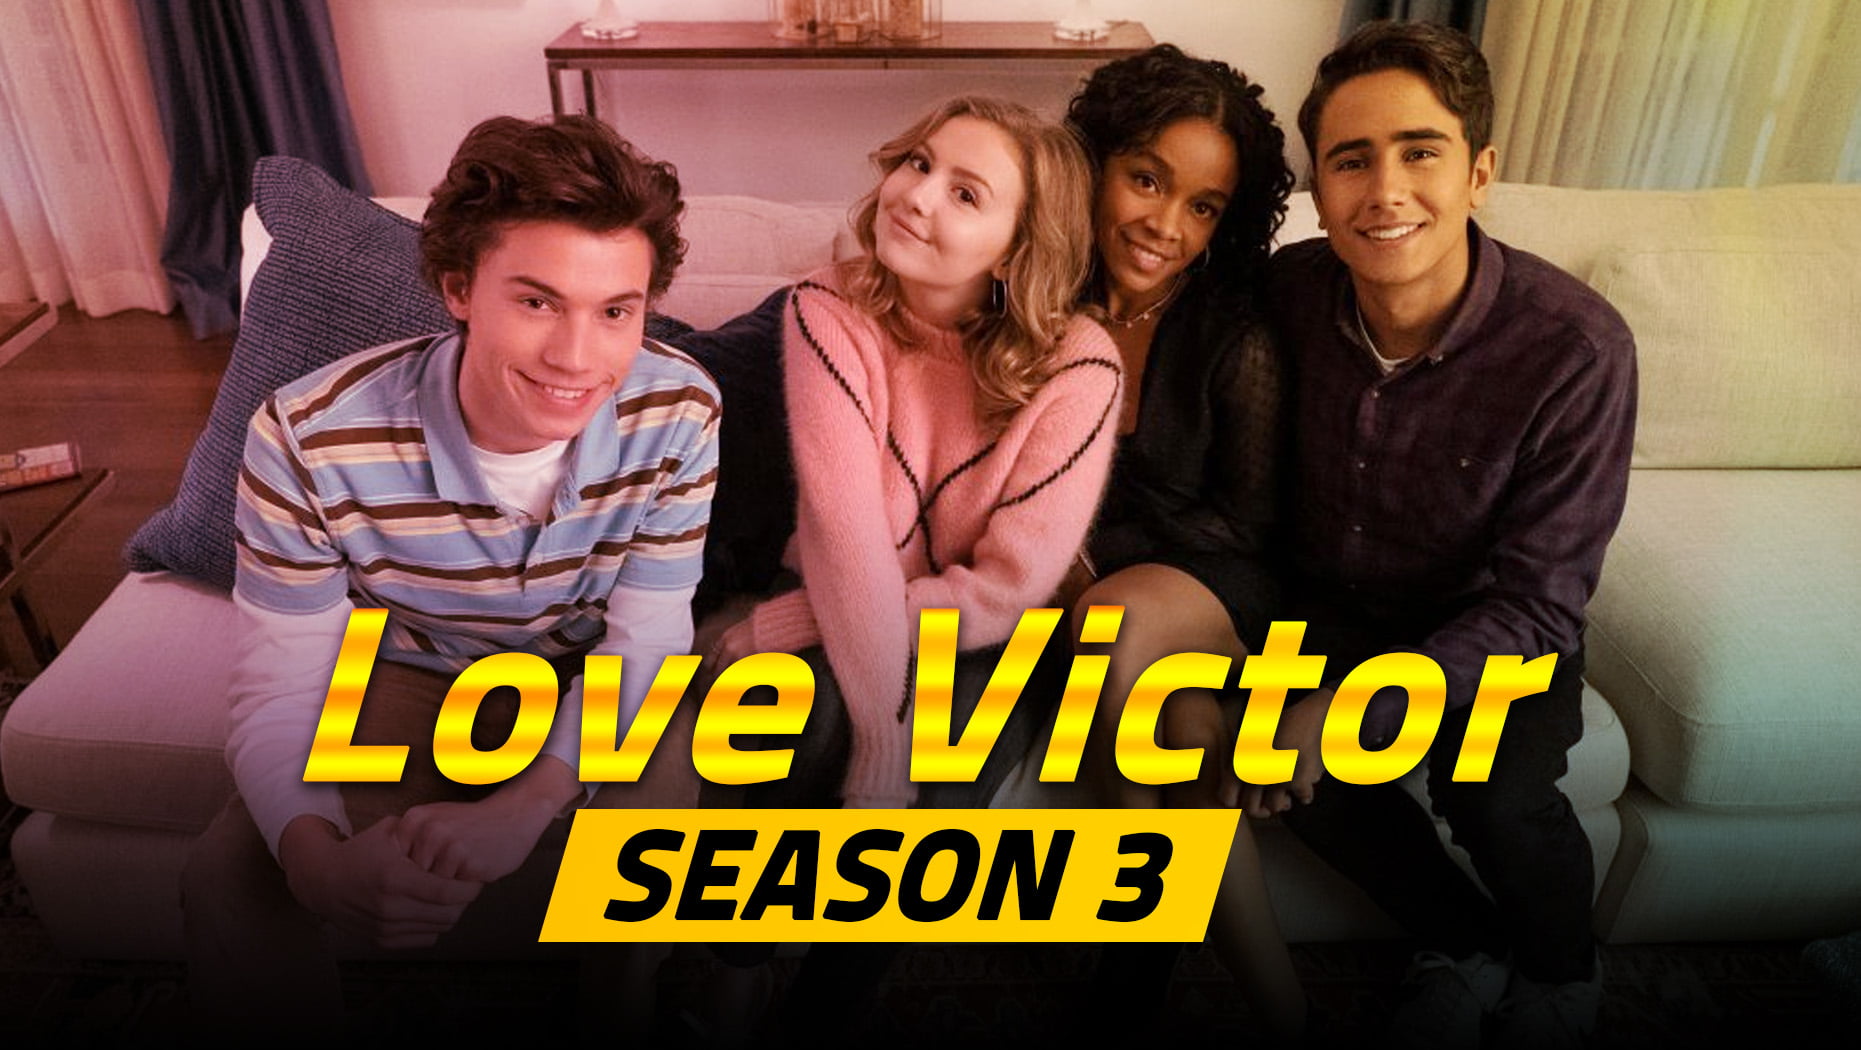 Love Victor Season 3 details